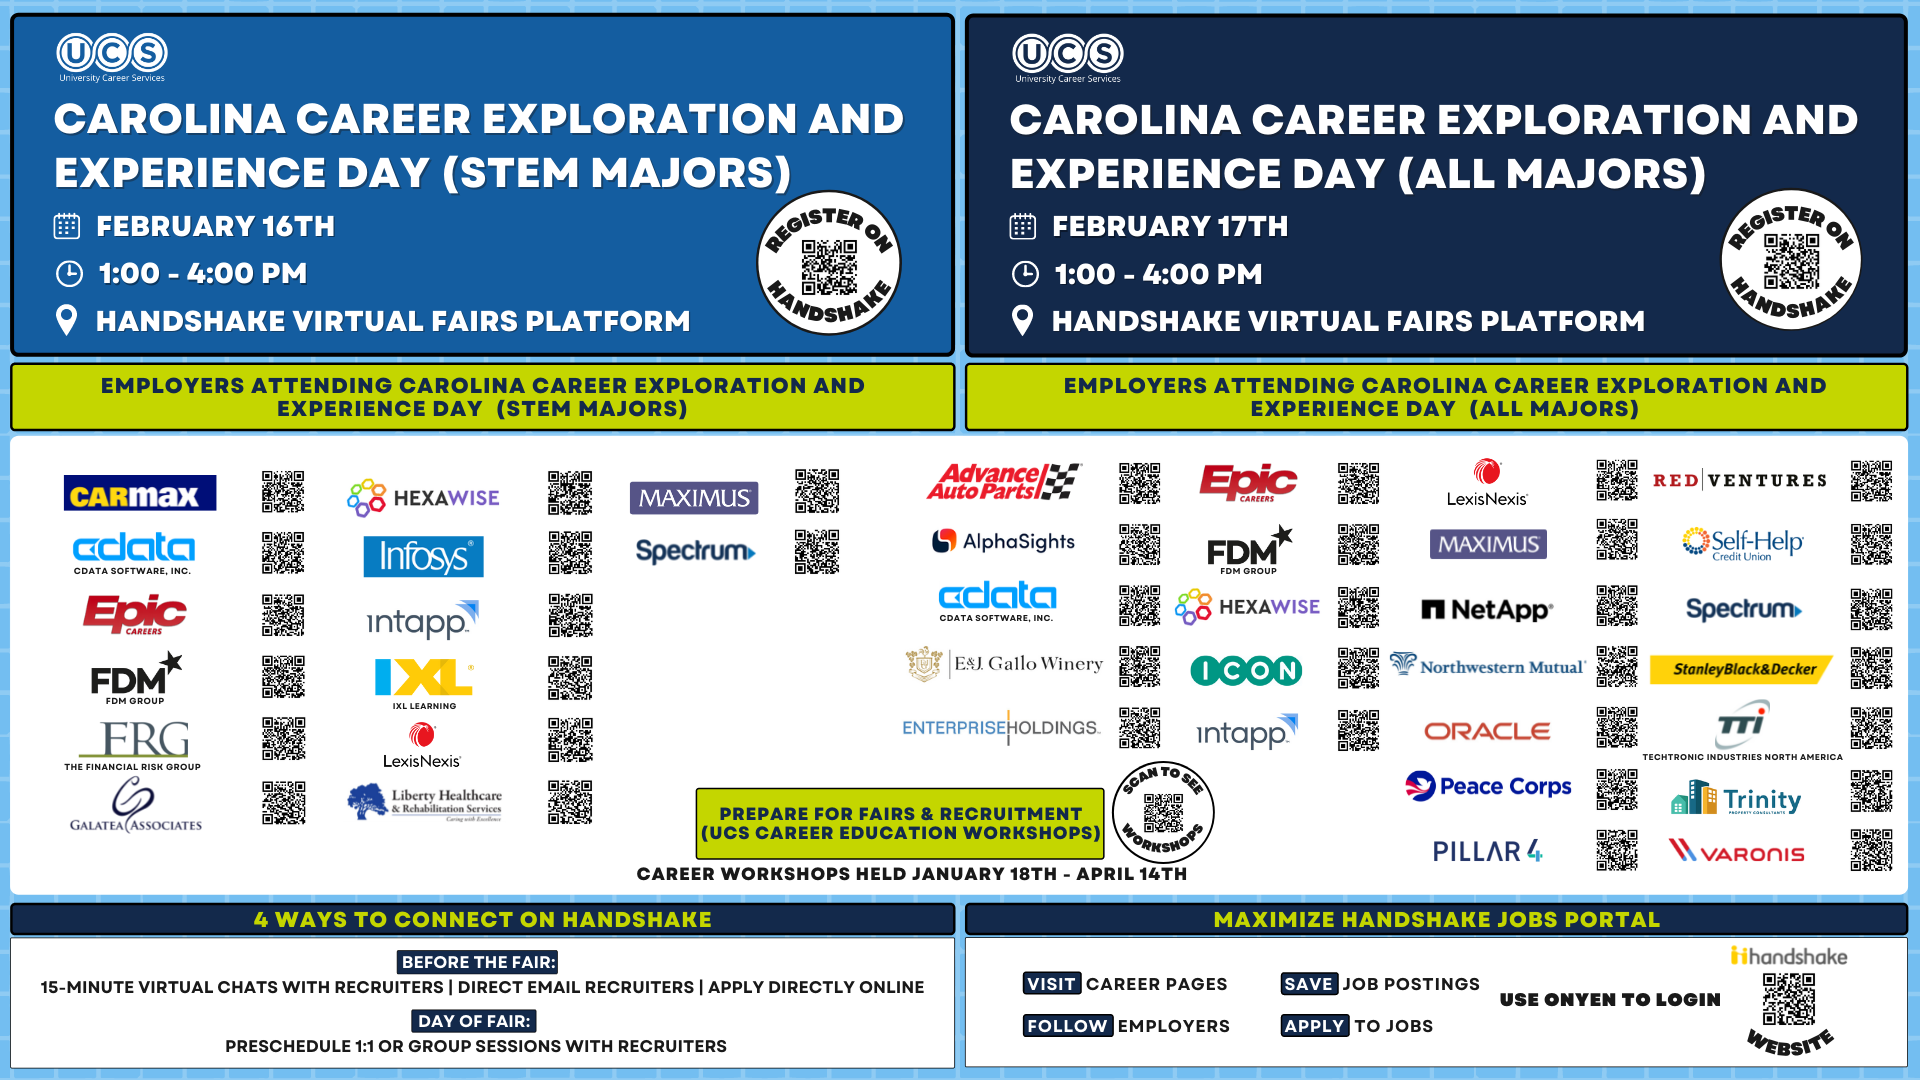 Carolina Career Exploration and Experience Day (Stem Majors) - February 16th at 1:00 - 4:00 PM on Handshake Virtual Fairs Platform. Carolina Career Exploration and Experience Day (All Majors) - February 17th at 1:00 - 4:00 PM on Handshake Virtual Fairs Pl